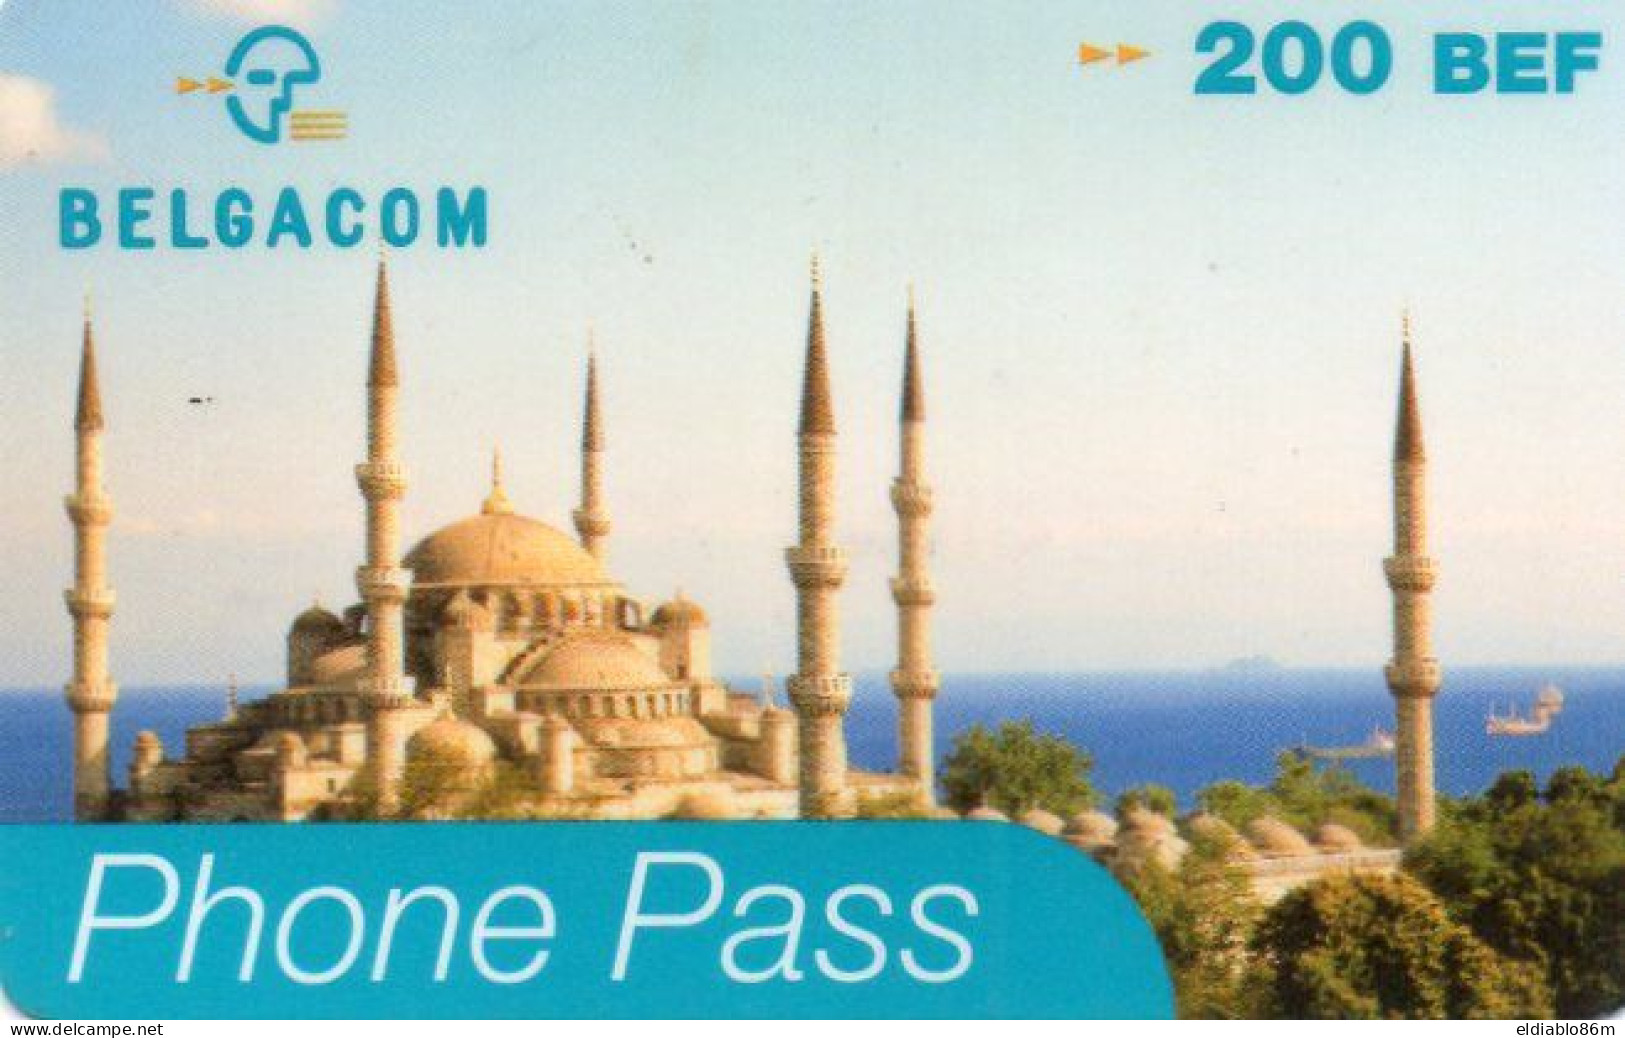 BELGIUM - PREPAID - BELGACOM - PHONE PASS - HAGIA SOPHIA ISTANBUL - TURKEY RELATED - Carte GSM, Ricarica & Prepagata